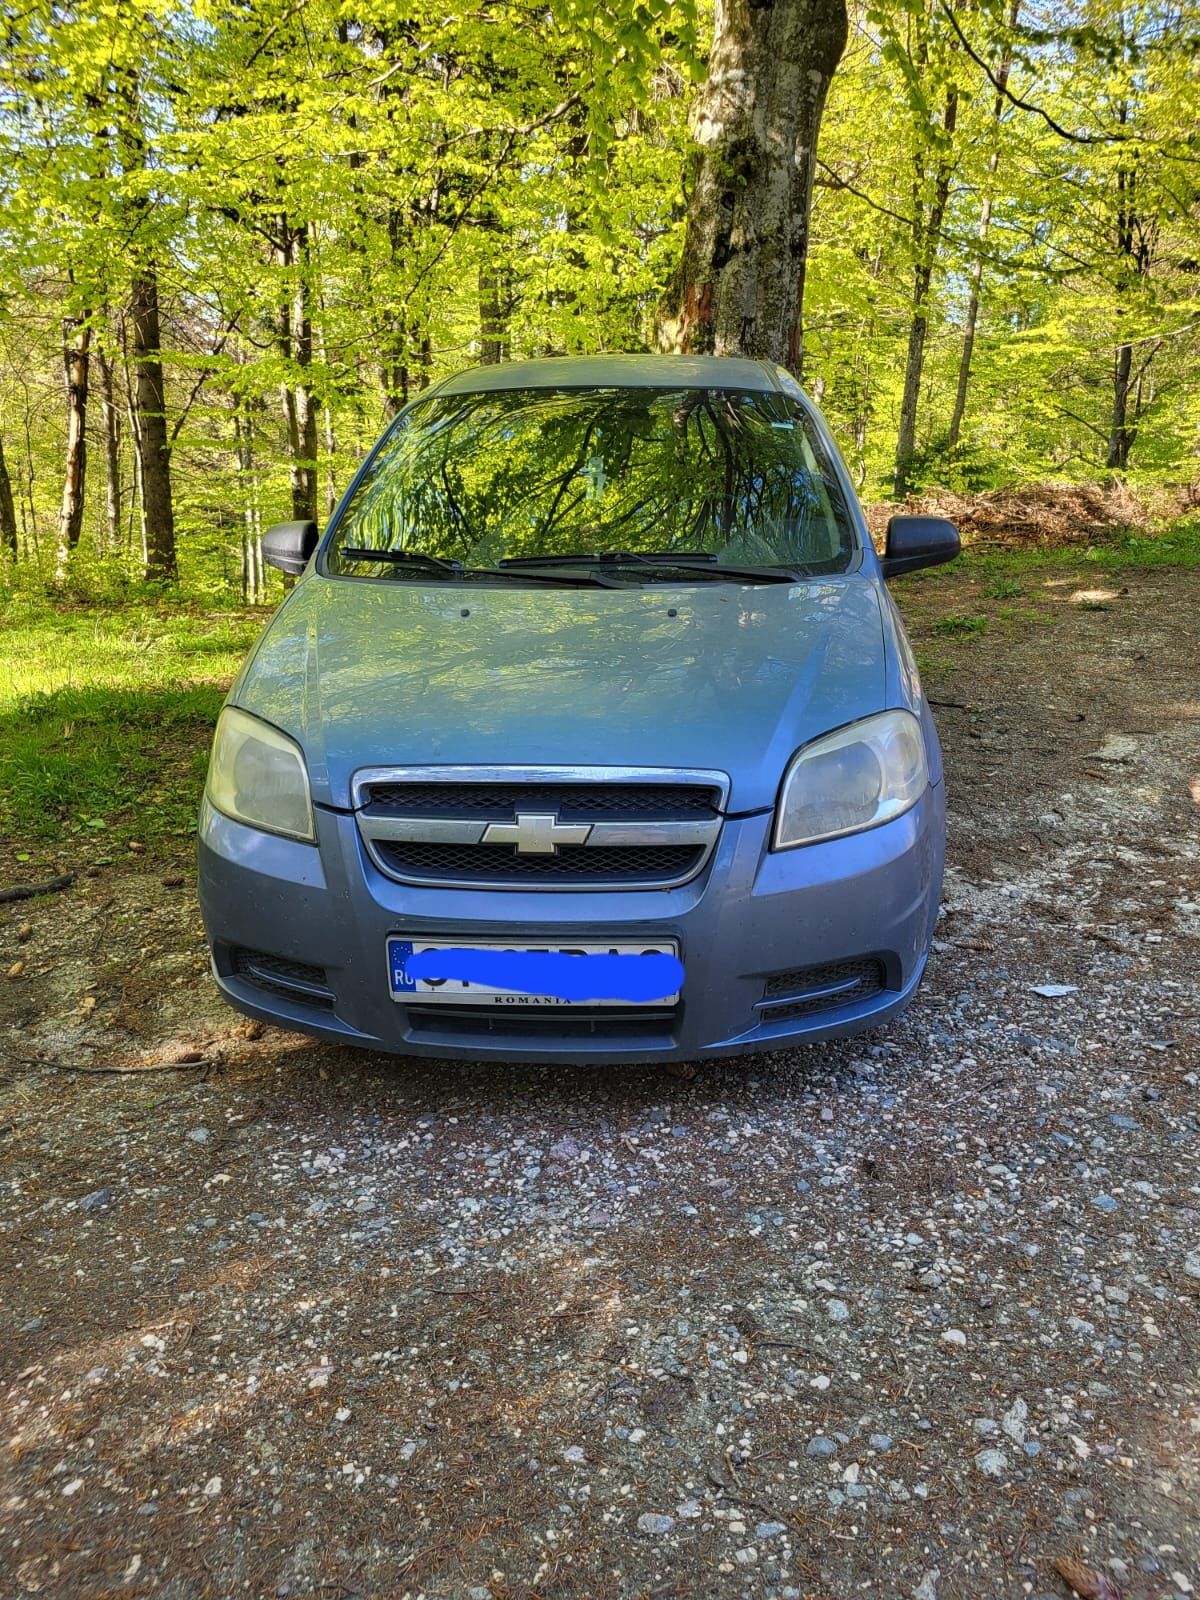 Chevrolet Aveo 2008 sau schimb cu remorca cu acte valabile